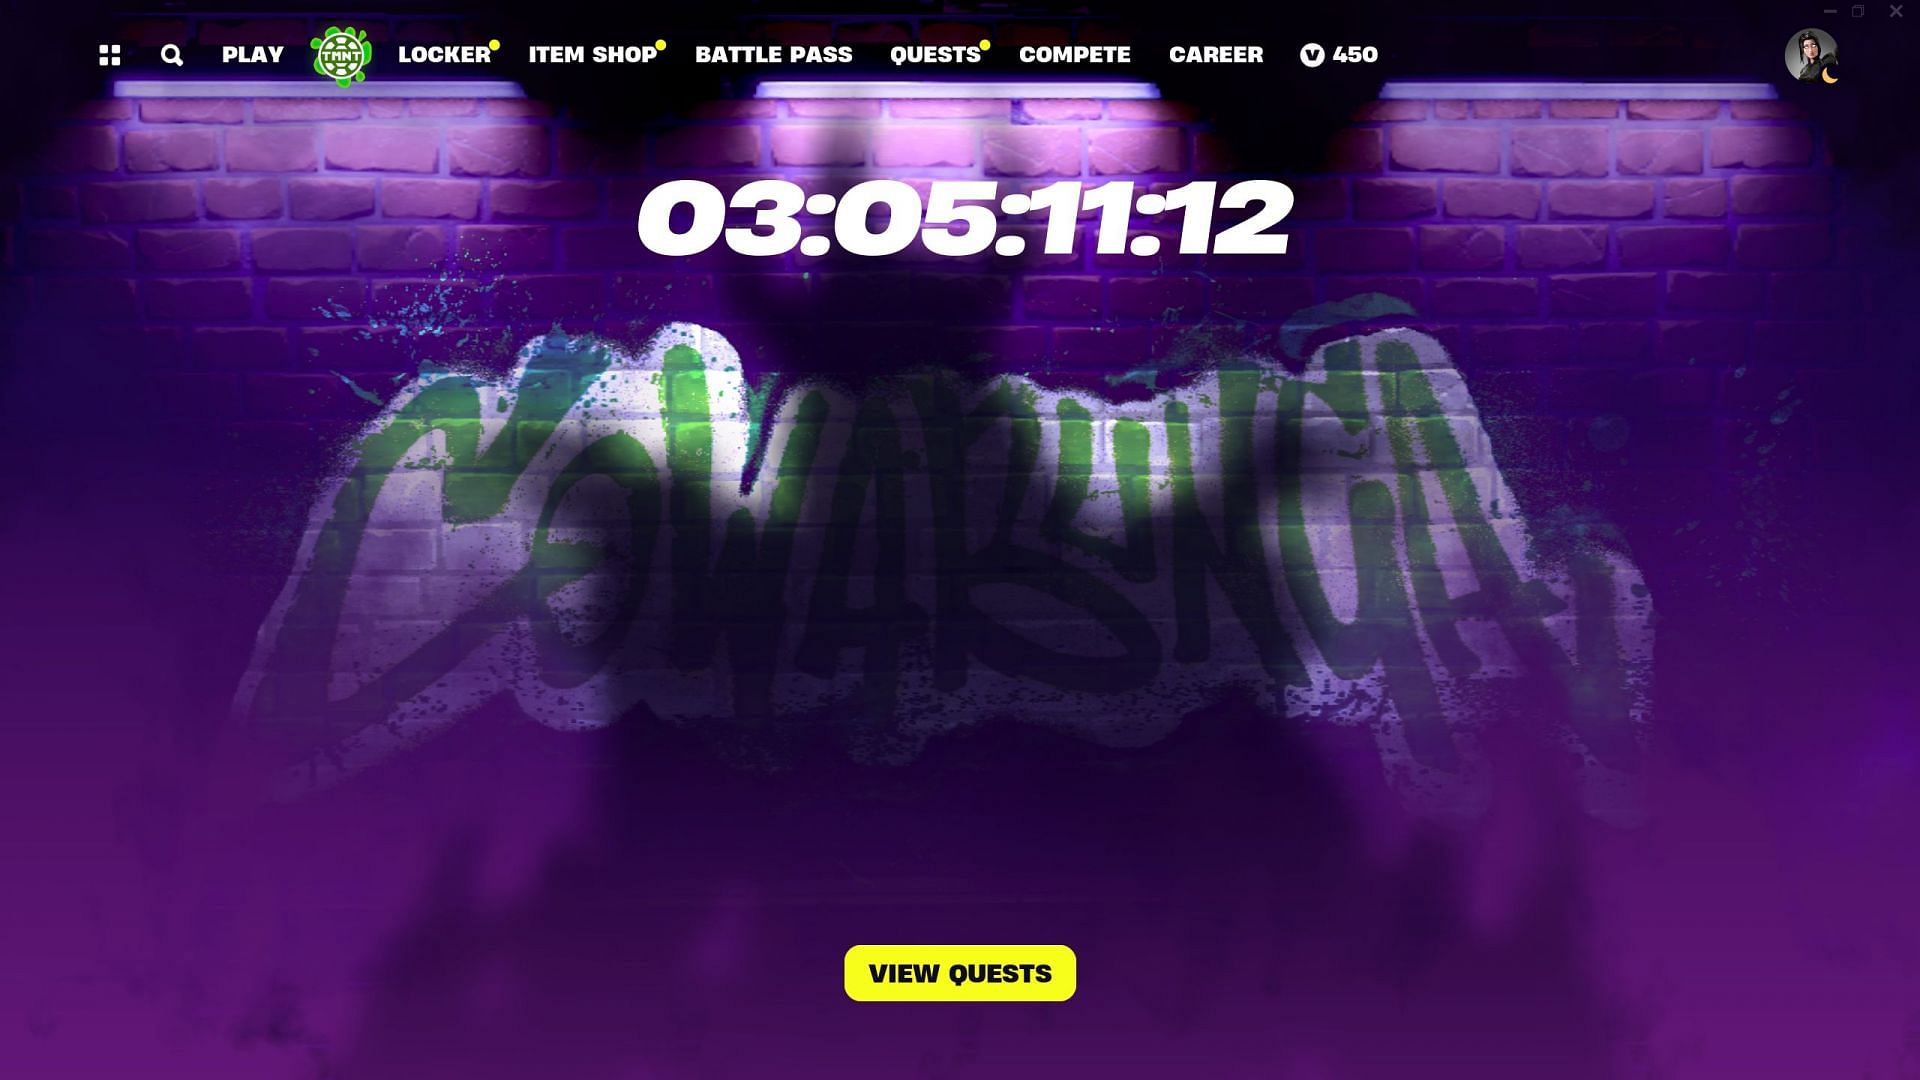 Fortnite Teenage Mutant Ninja Turtle event countdown timer (Image via Epic Games/Fortnite)